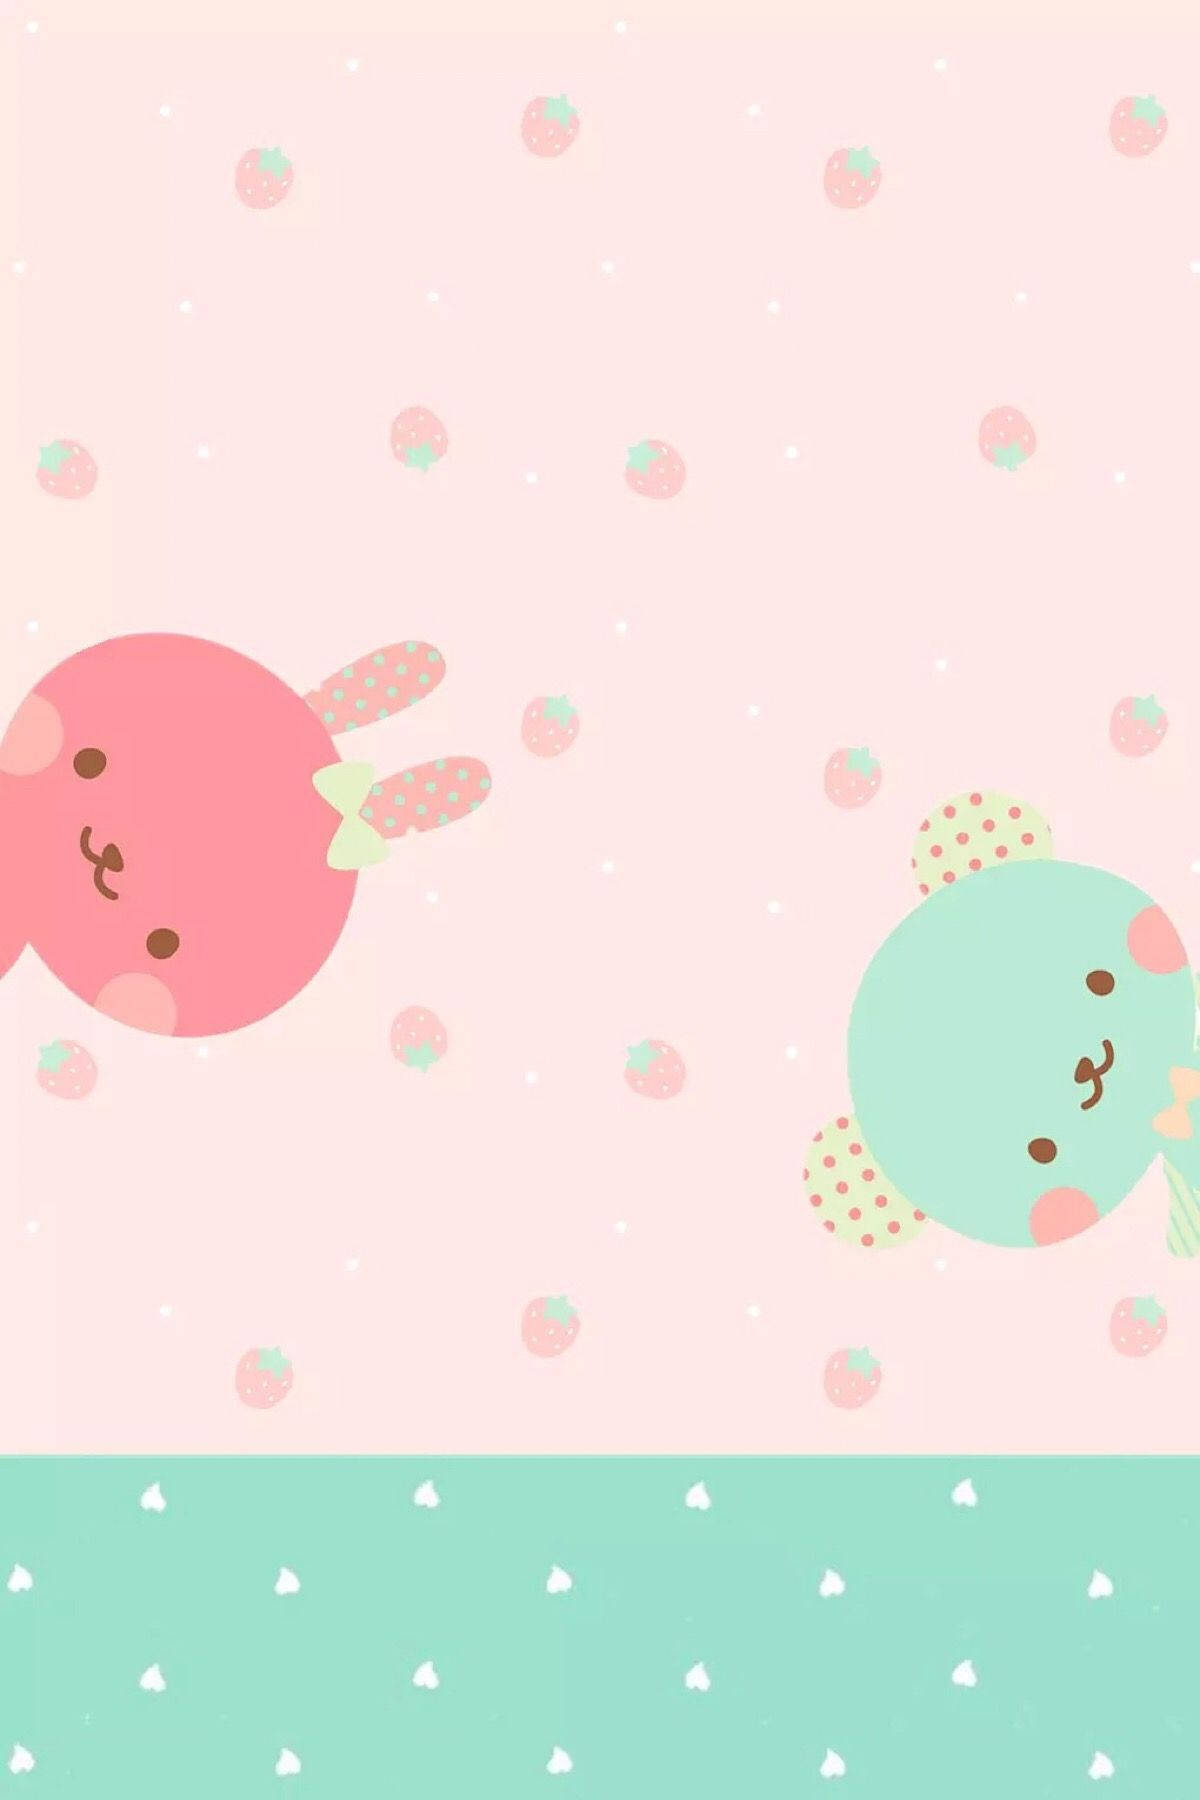 Cute Pink Rabbit And Green Bear Wallpaper